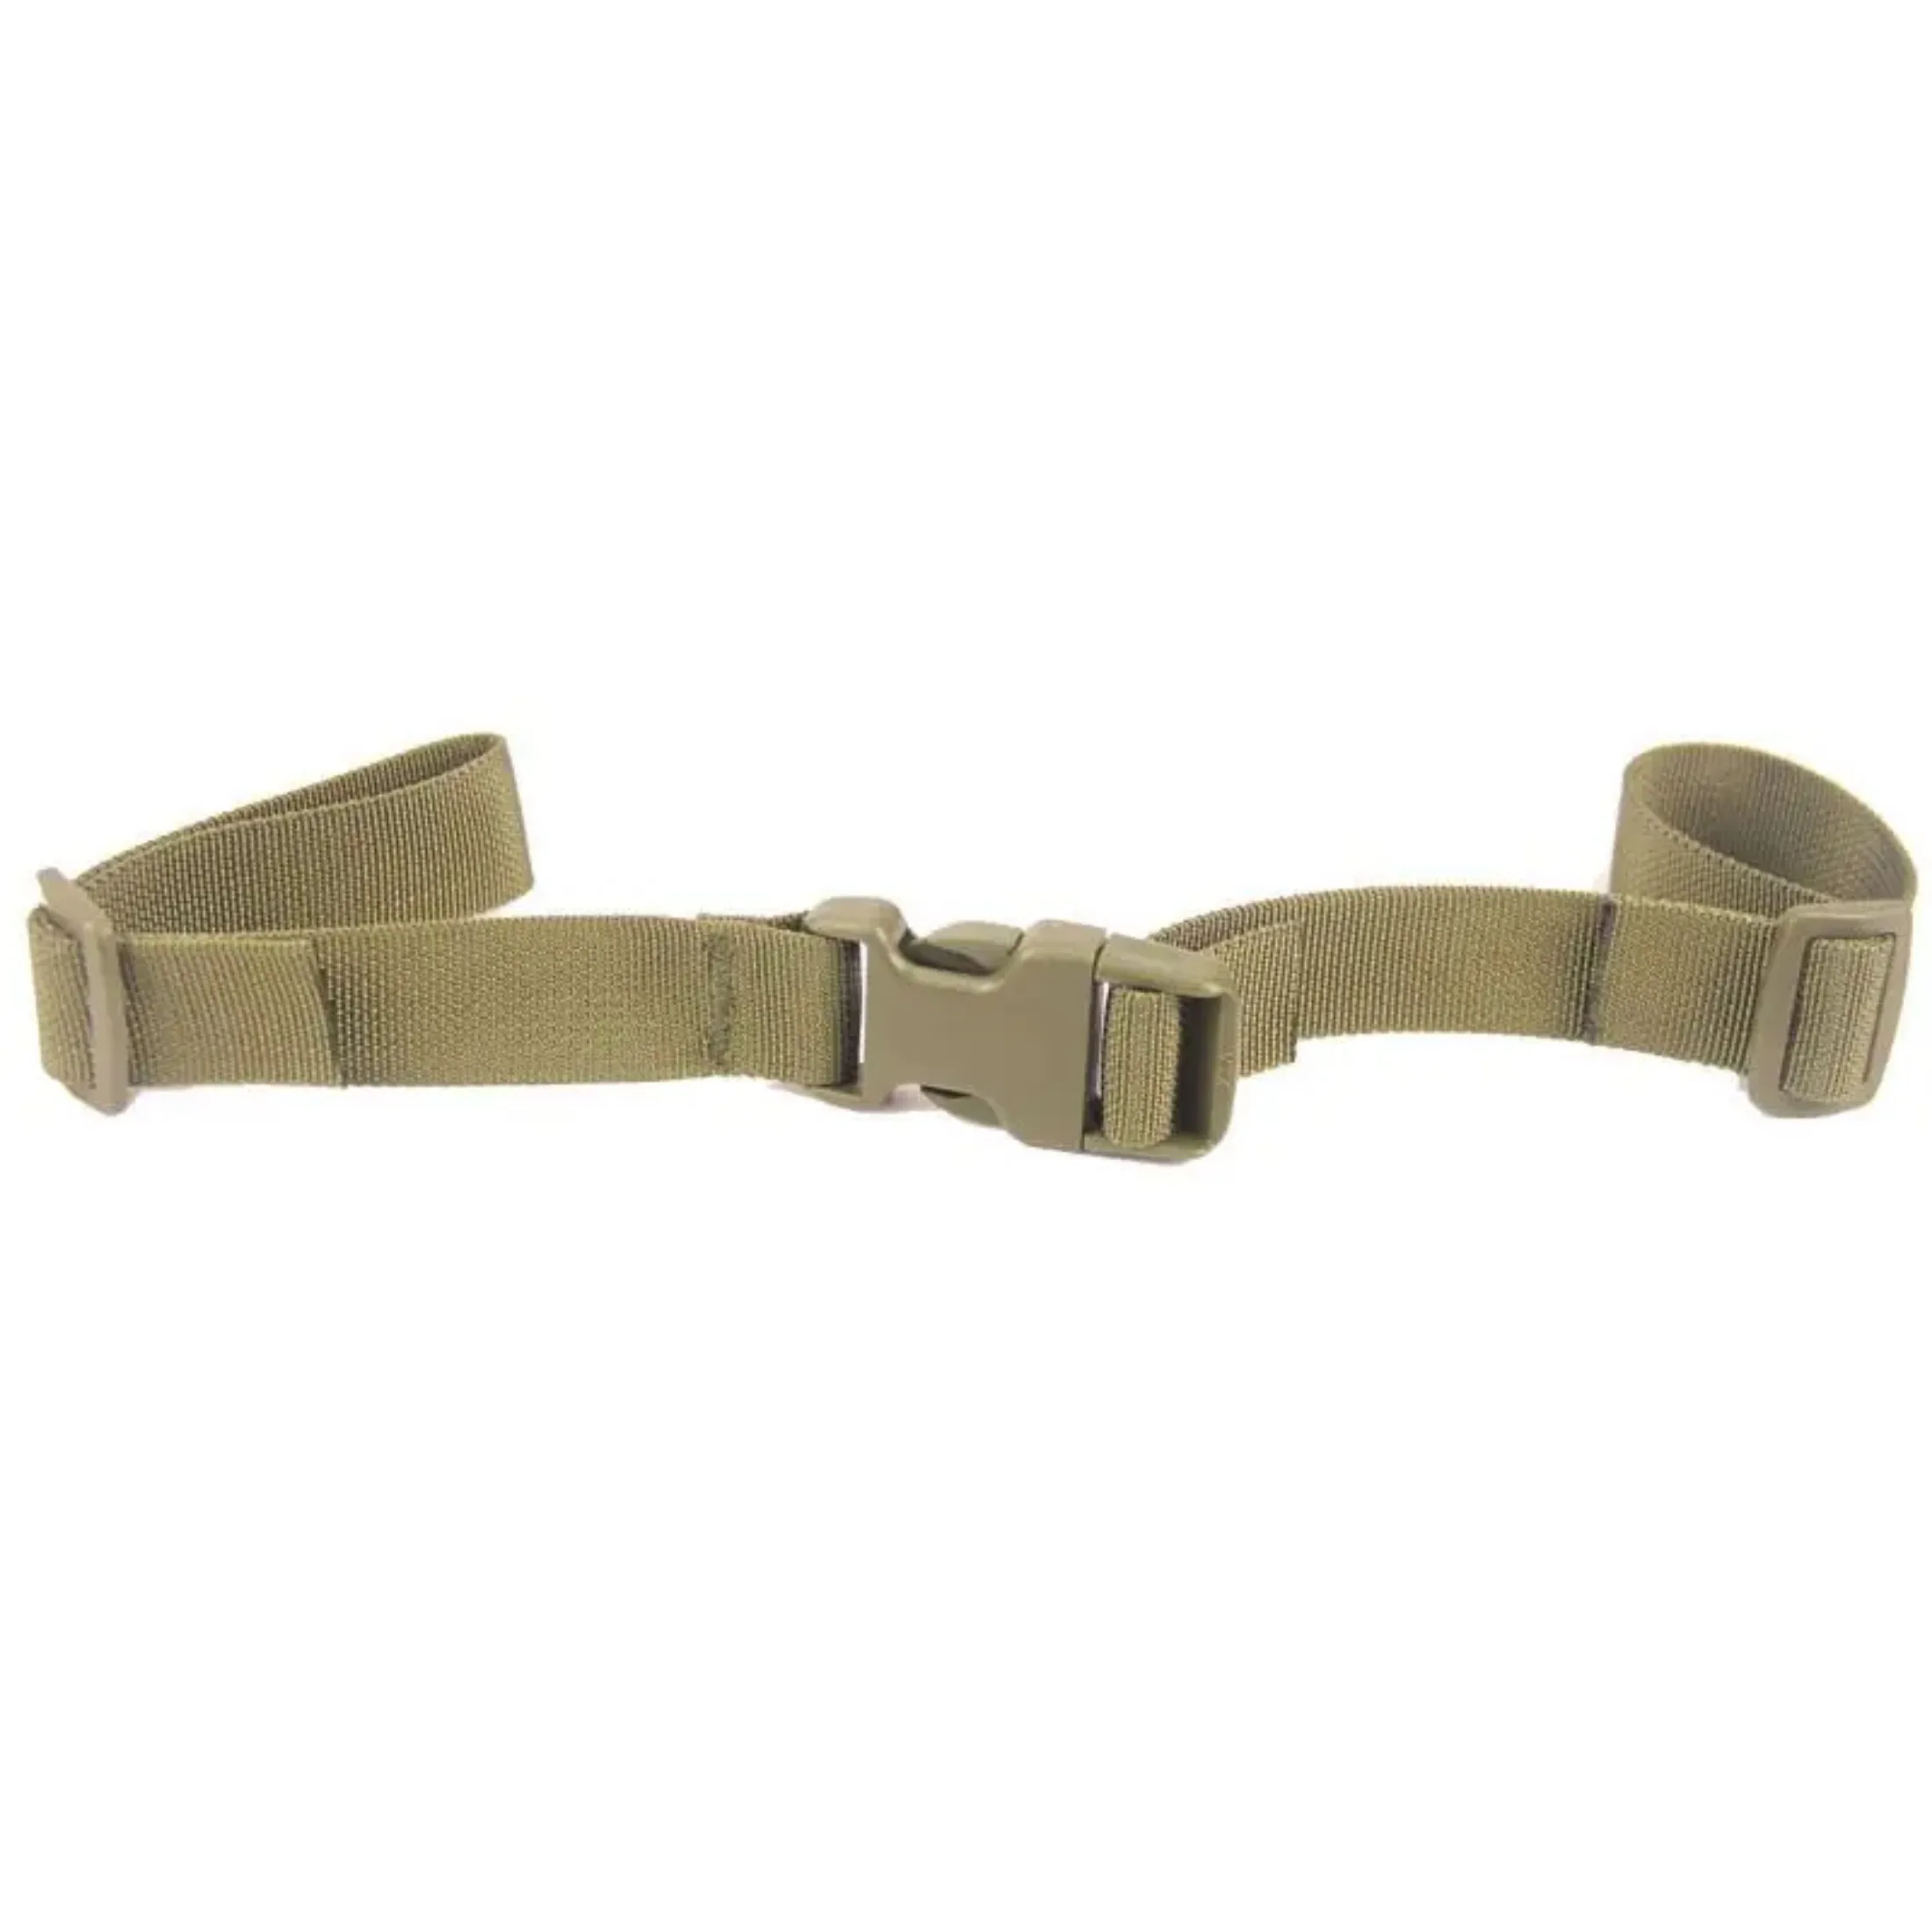 Camouflage Backpack Chest Strap Adjustable Backpack Heavy Duty Chest Strap Belt for Hiking Jogging Non-slip Pull Belt